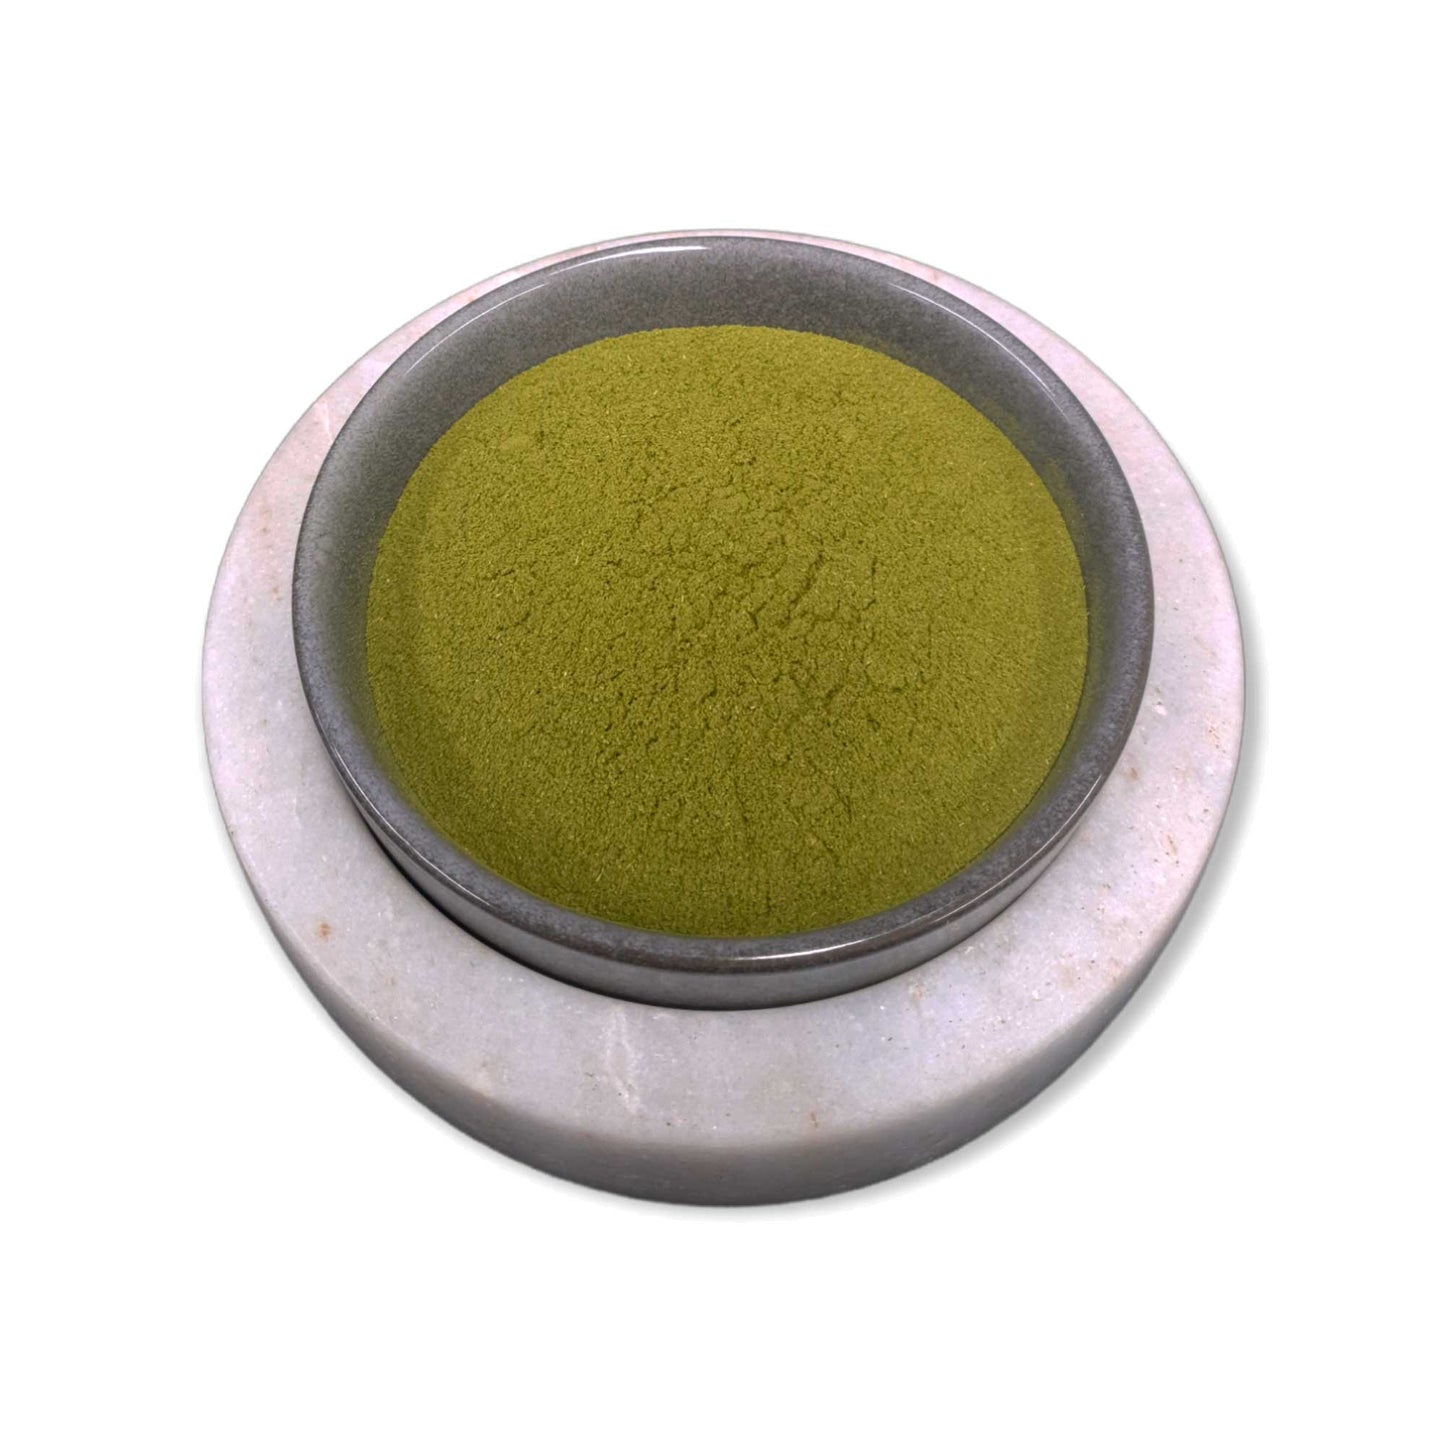 Organic Moringa Leaf Powder - Supplement Moringa Oleifera Drumstick Leaf